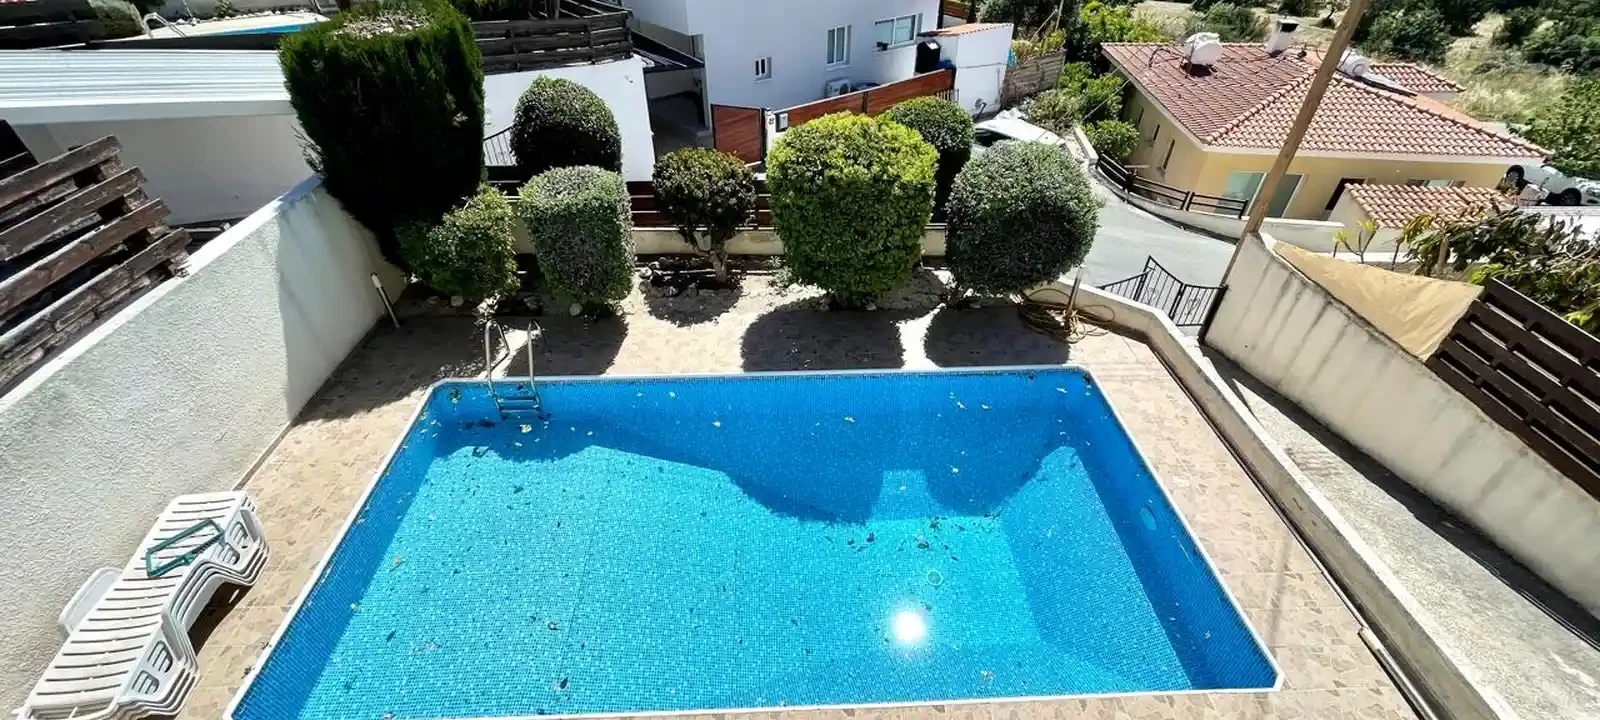 3-bedroom villa fоr sаle €295.000, image 1